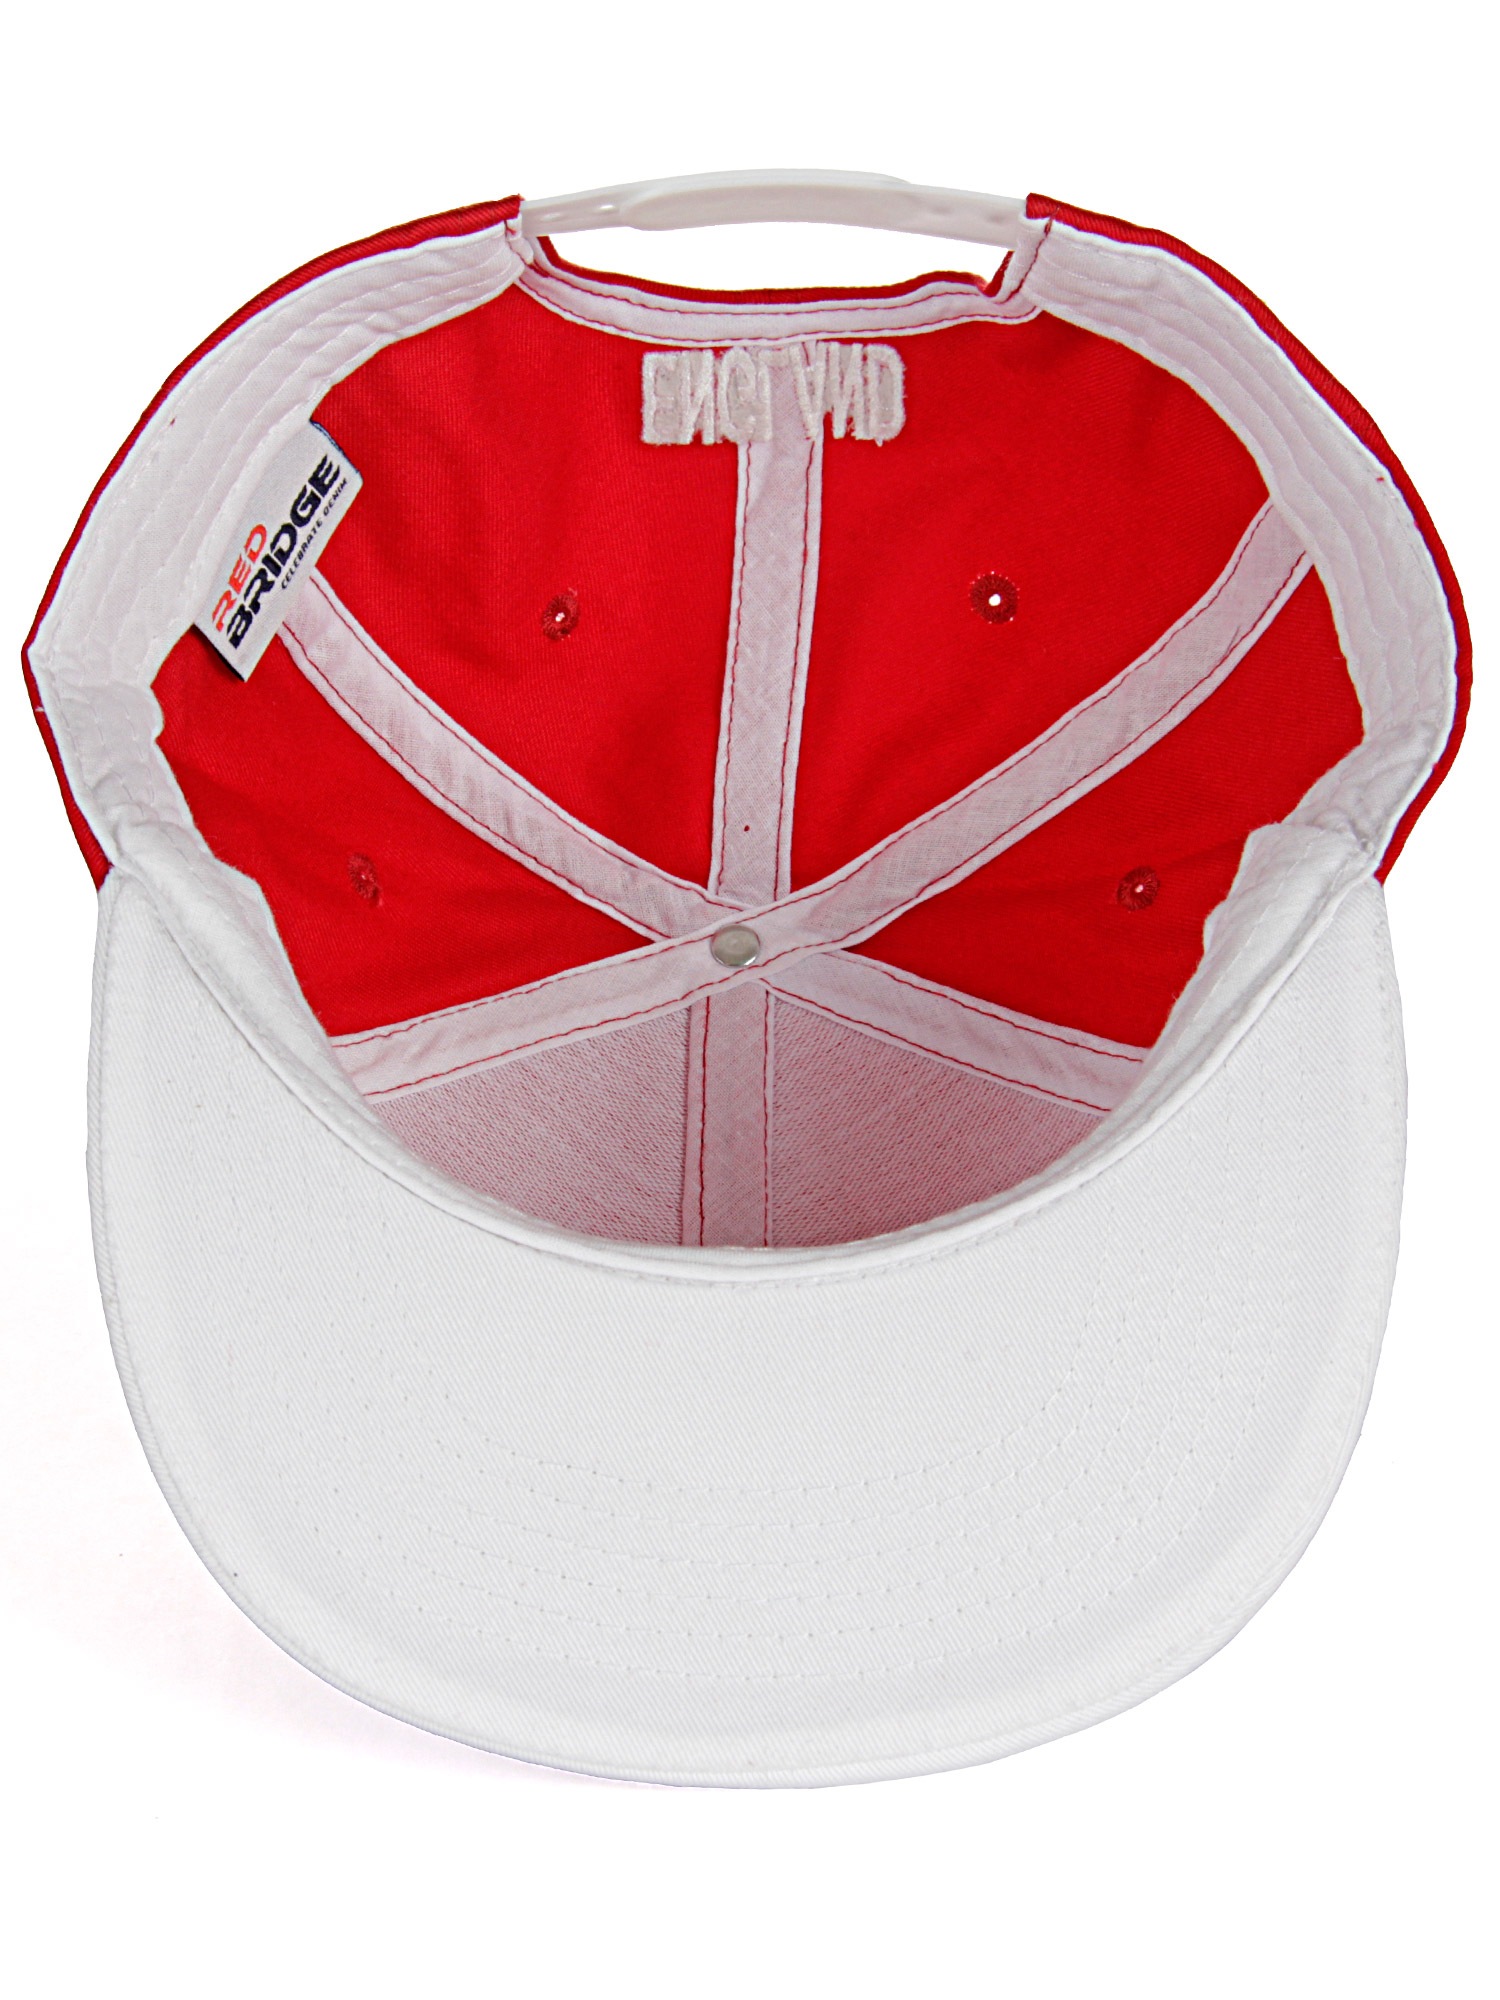 RedBridge Baseball Cap »Torquay« mit Schild geradem